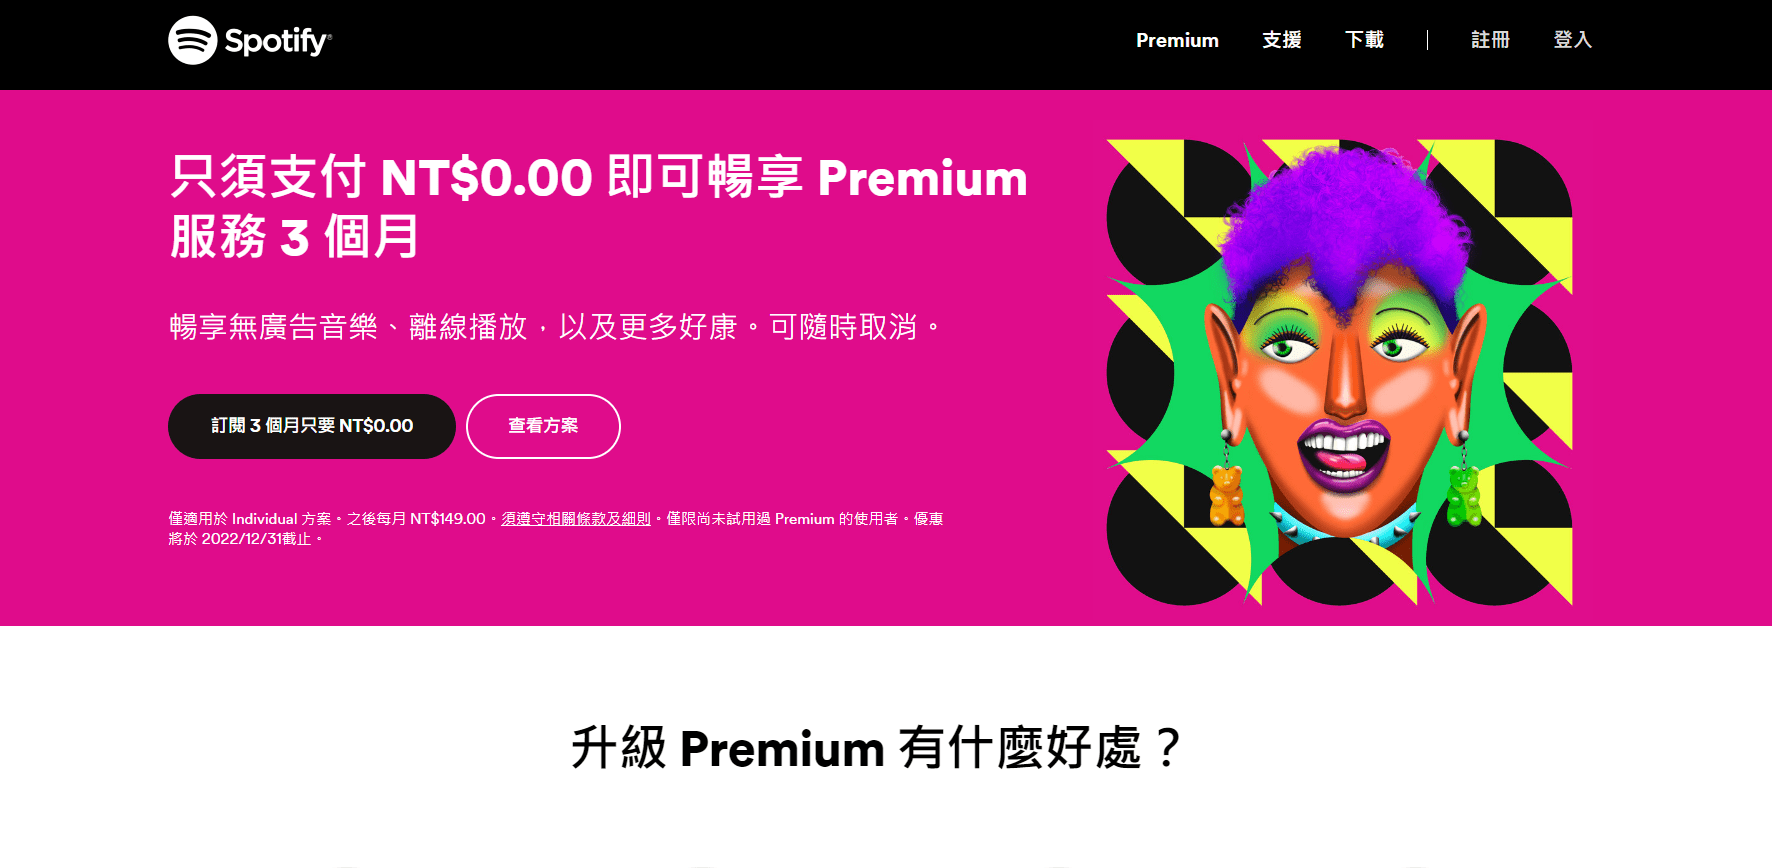 Spotify Premium (付費版)